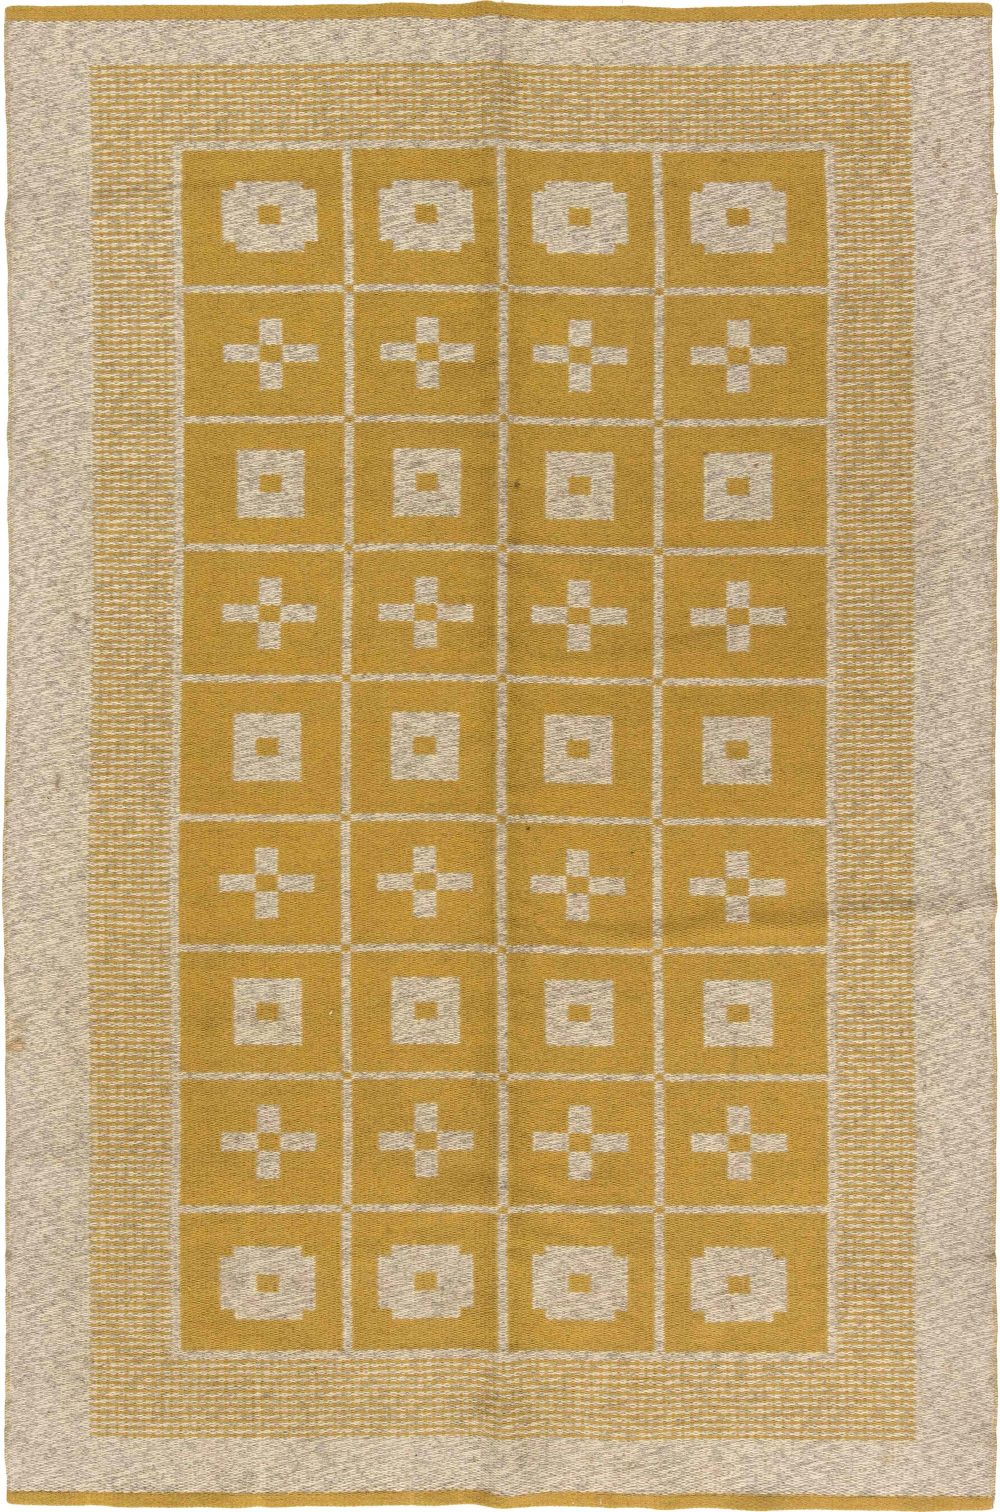 Mid-20th Century Reversible Geometric Mustard Yellow, Gray, Ivory Swedish Rug BB4982